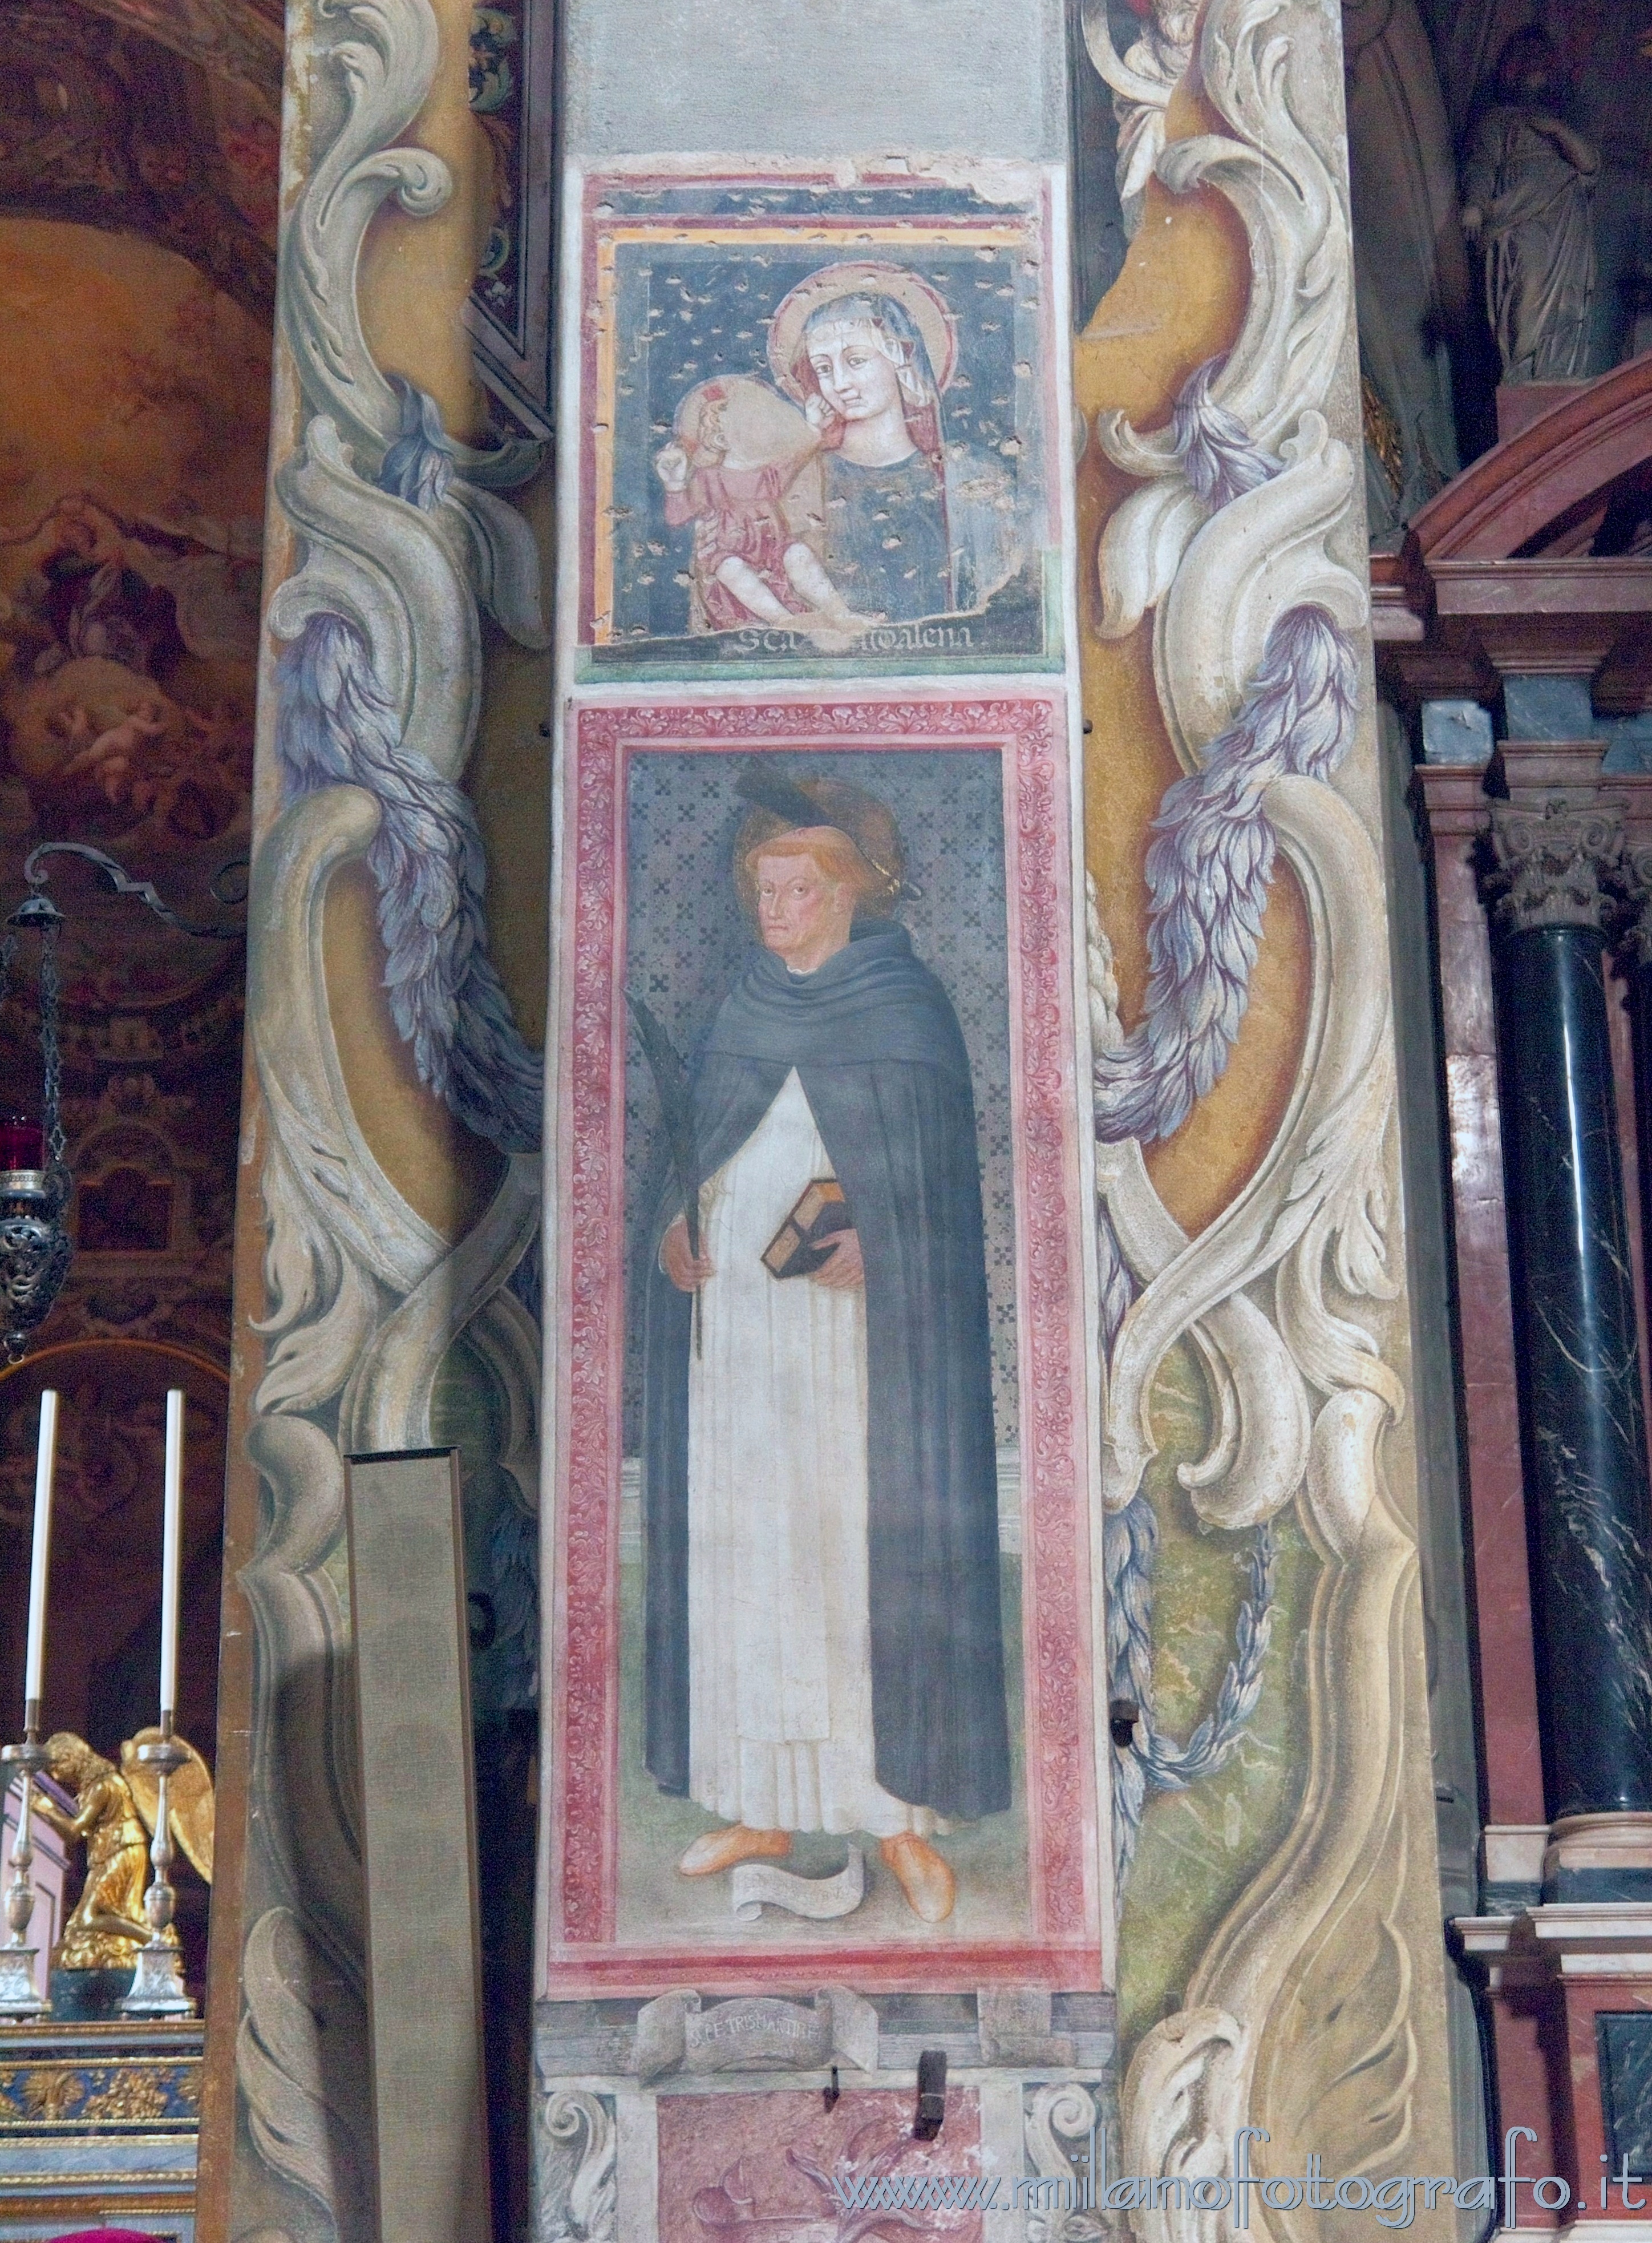 Monza (Monza e Brianza, Italy): Fresco of St. Peter Martyr in the Cathedral of Monza - Monza (Monza e Brianza, Italy)